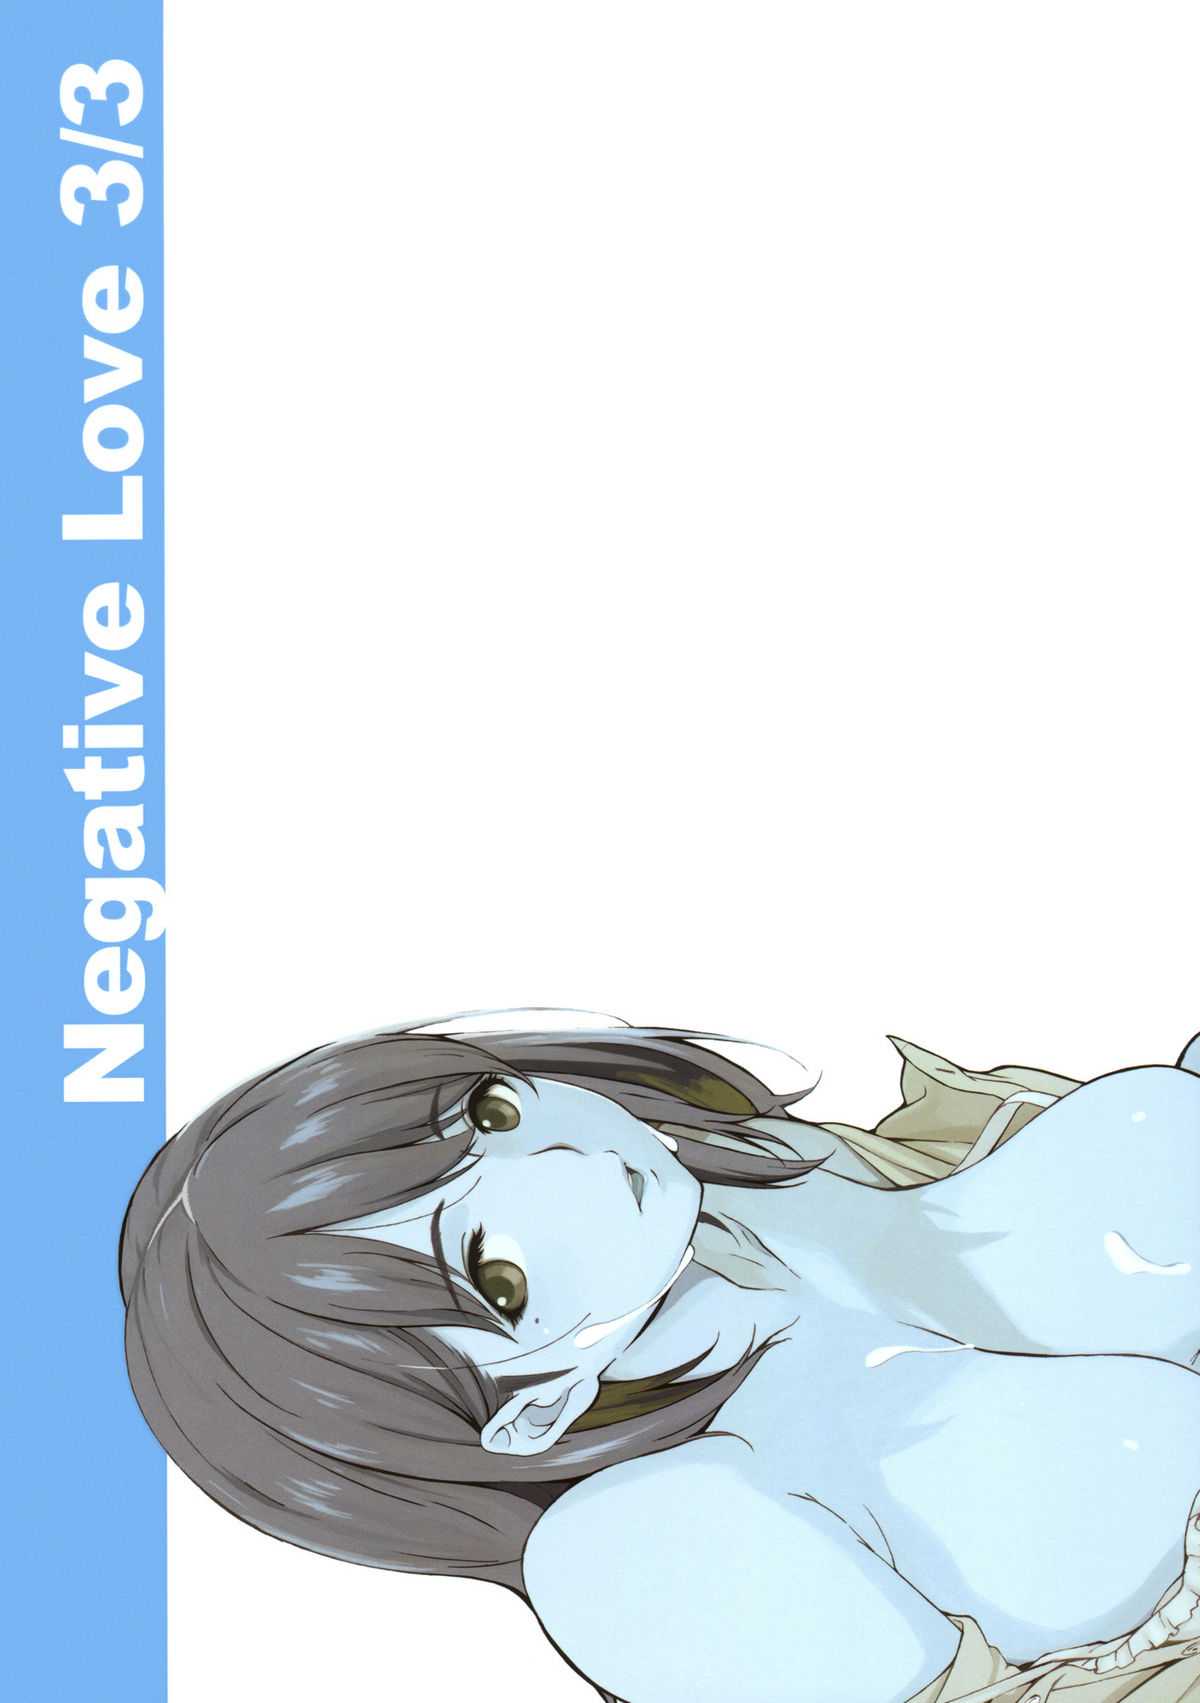 (COMIC1☆6) [Kansai Orange (Arai Kei)] Negative Love 3/3 (Love Plus) [English] [CGRascal] (COMIC1☆6) [関西オレンジ (荒井啓)] Negative Love 3/3 (ラブプラス) [英訳]